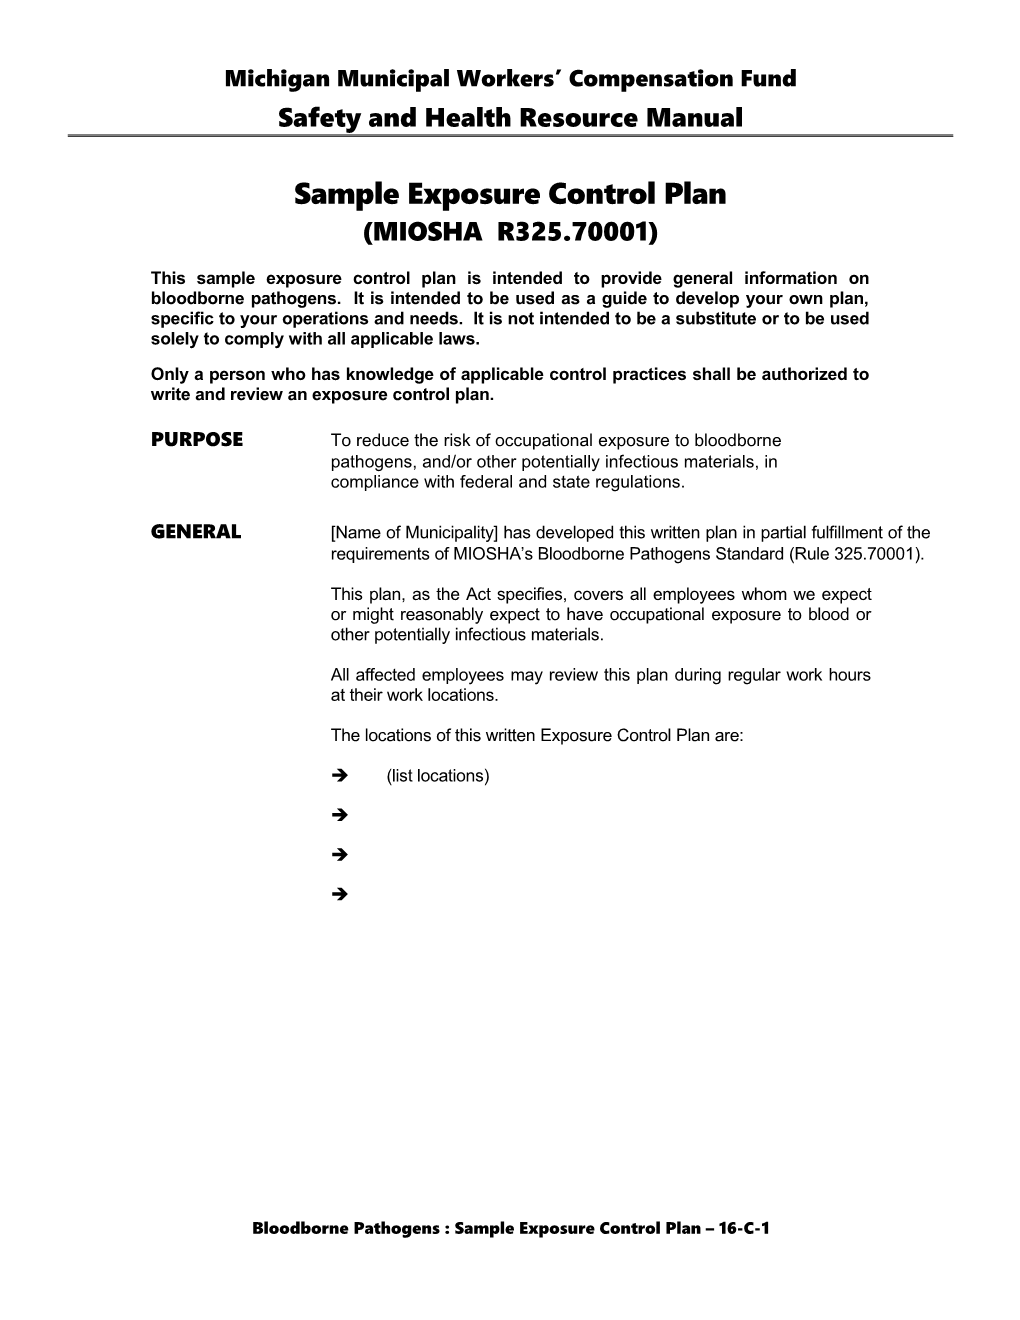 Sample Exposure Control Plan